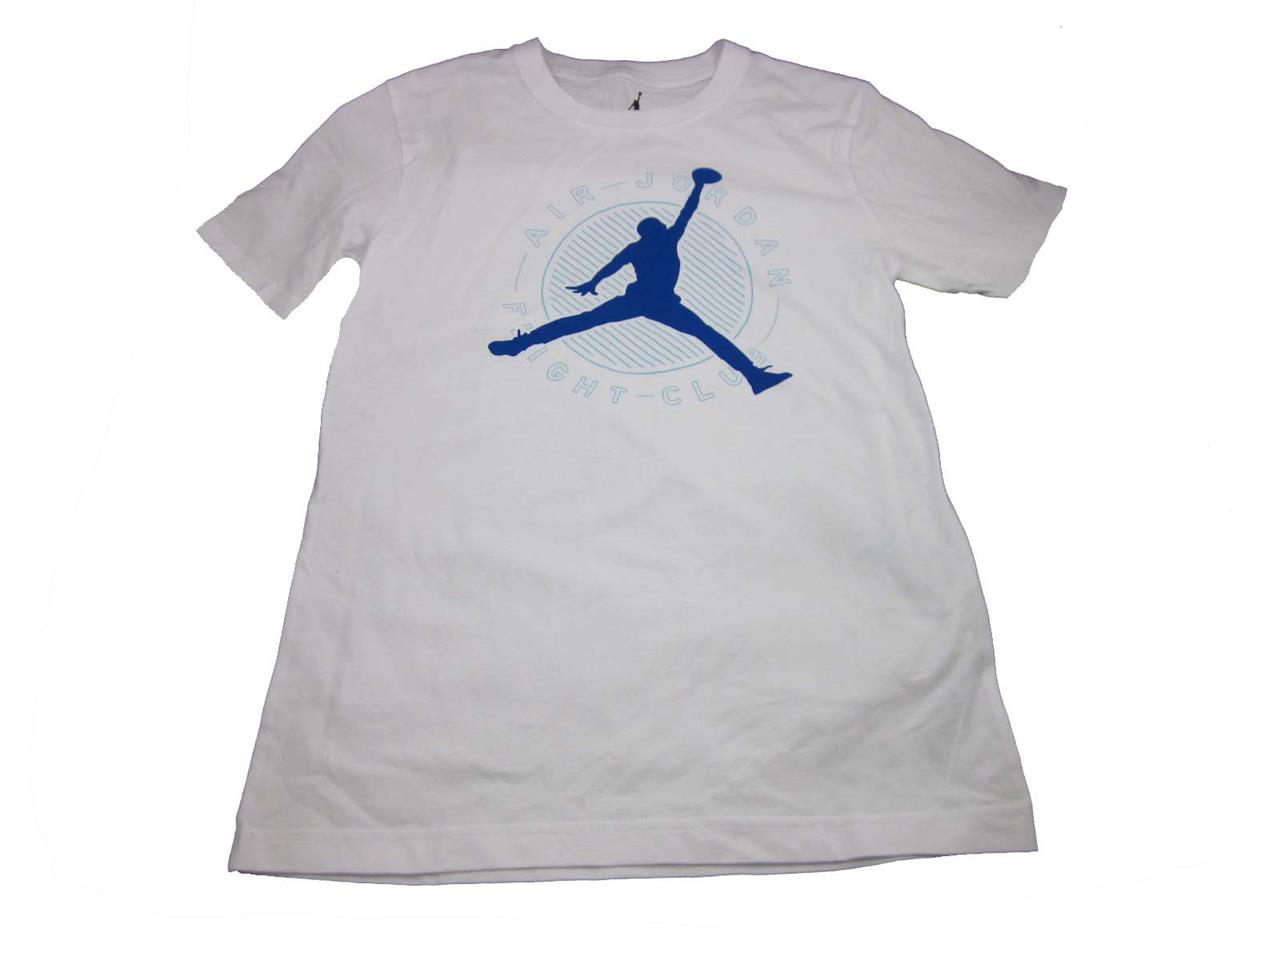 Big Selection Boys Youth Nike Air Jordan T-Shirt Tee Red White Black S ...